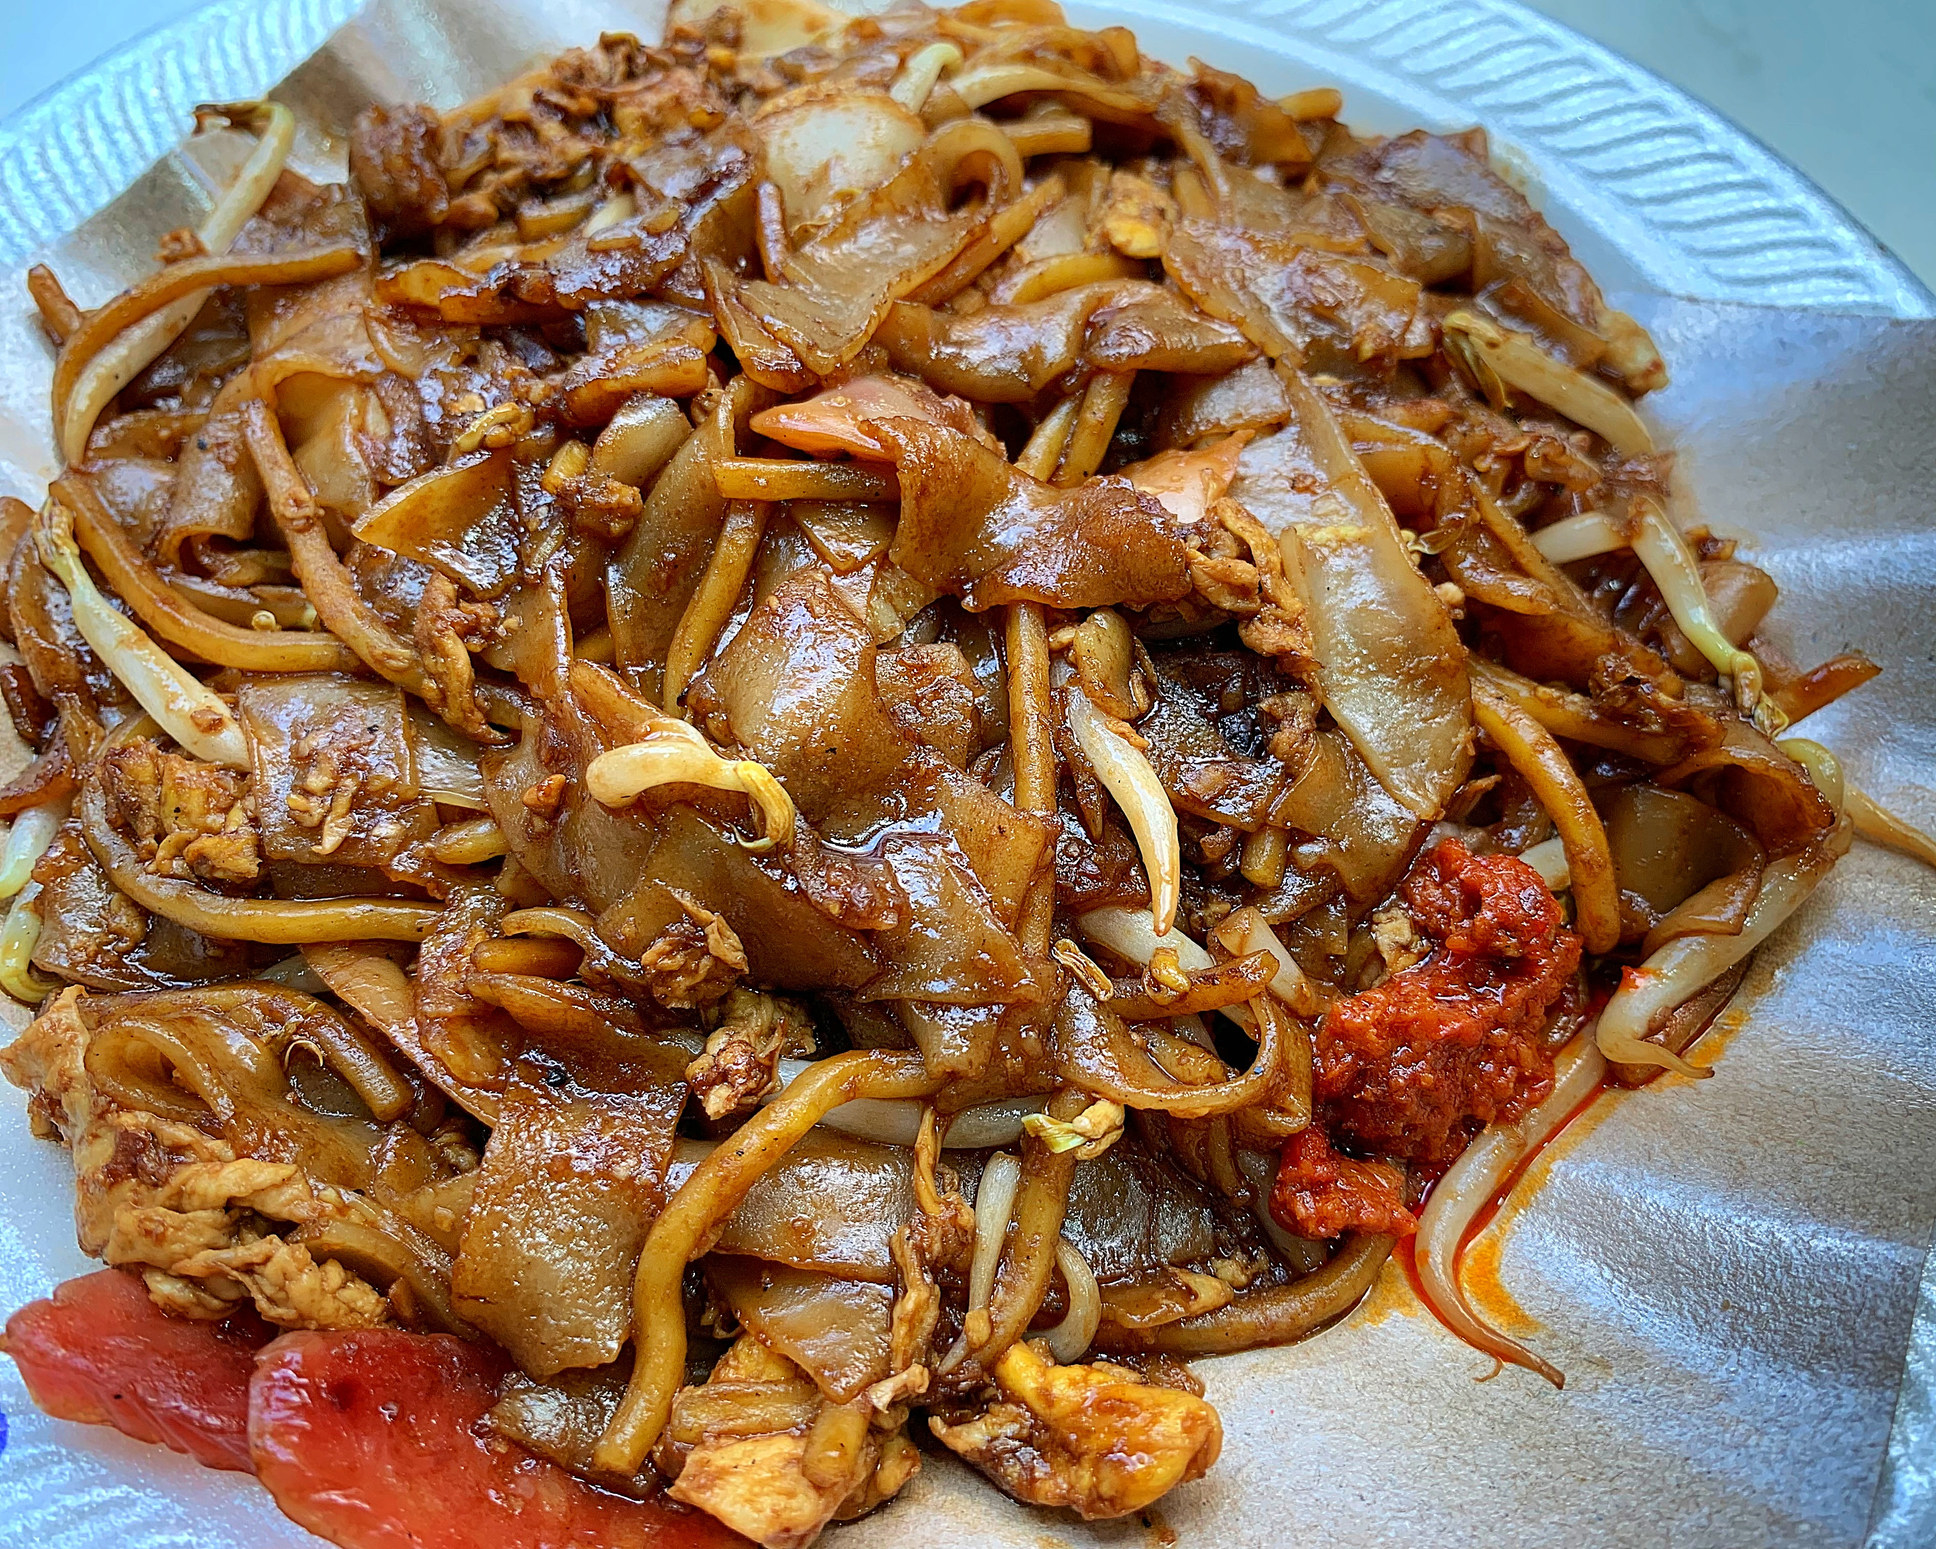 Char kway teow aka Singaporean stir fried noodles.